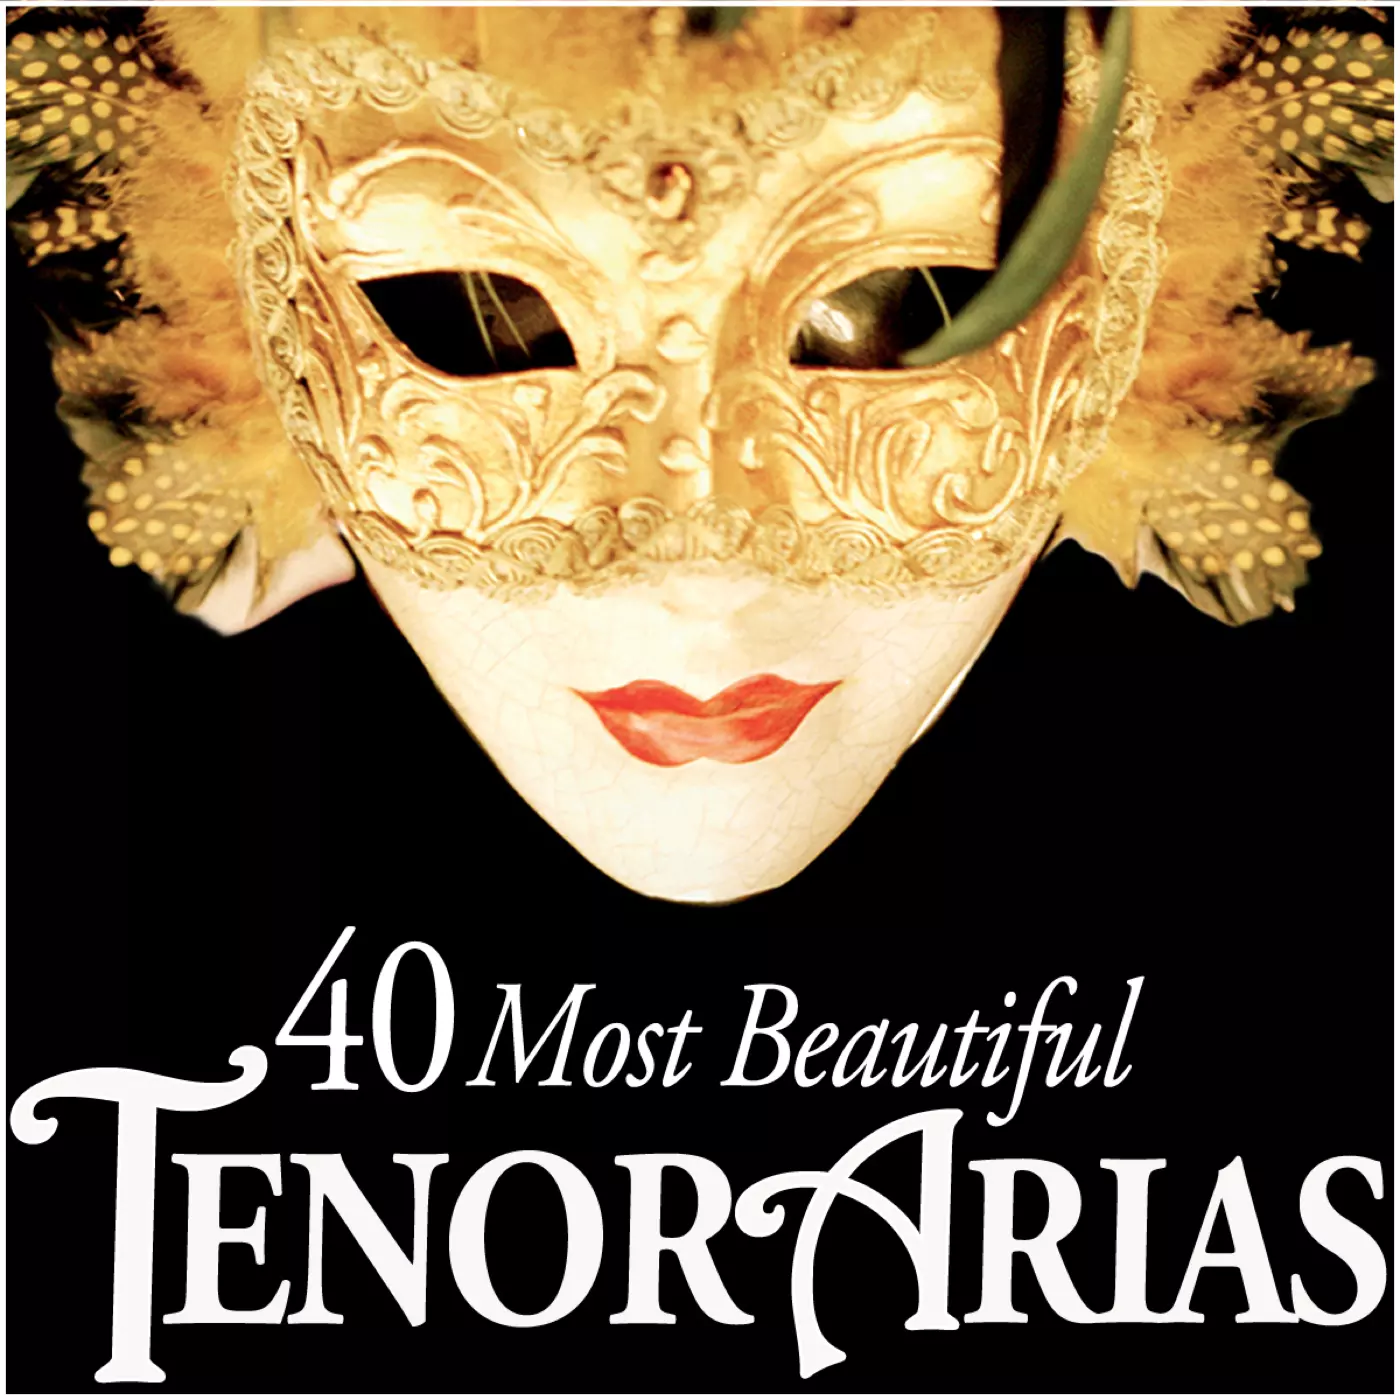 40 Most Beautiful Tenor Arias